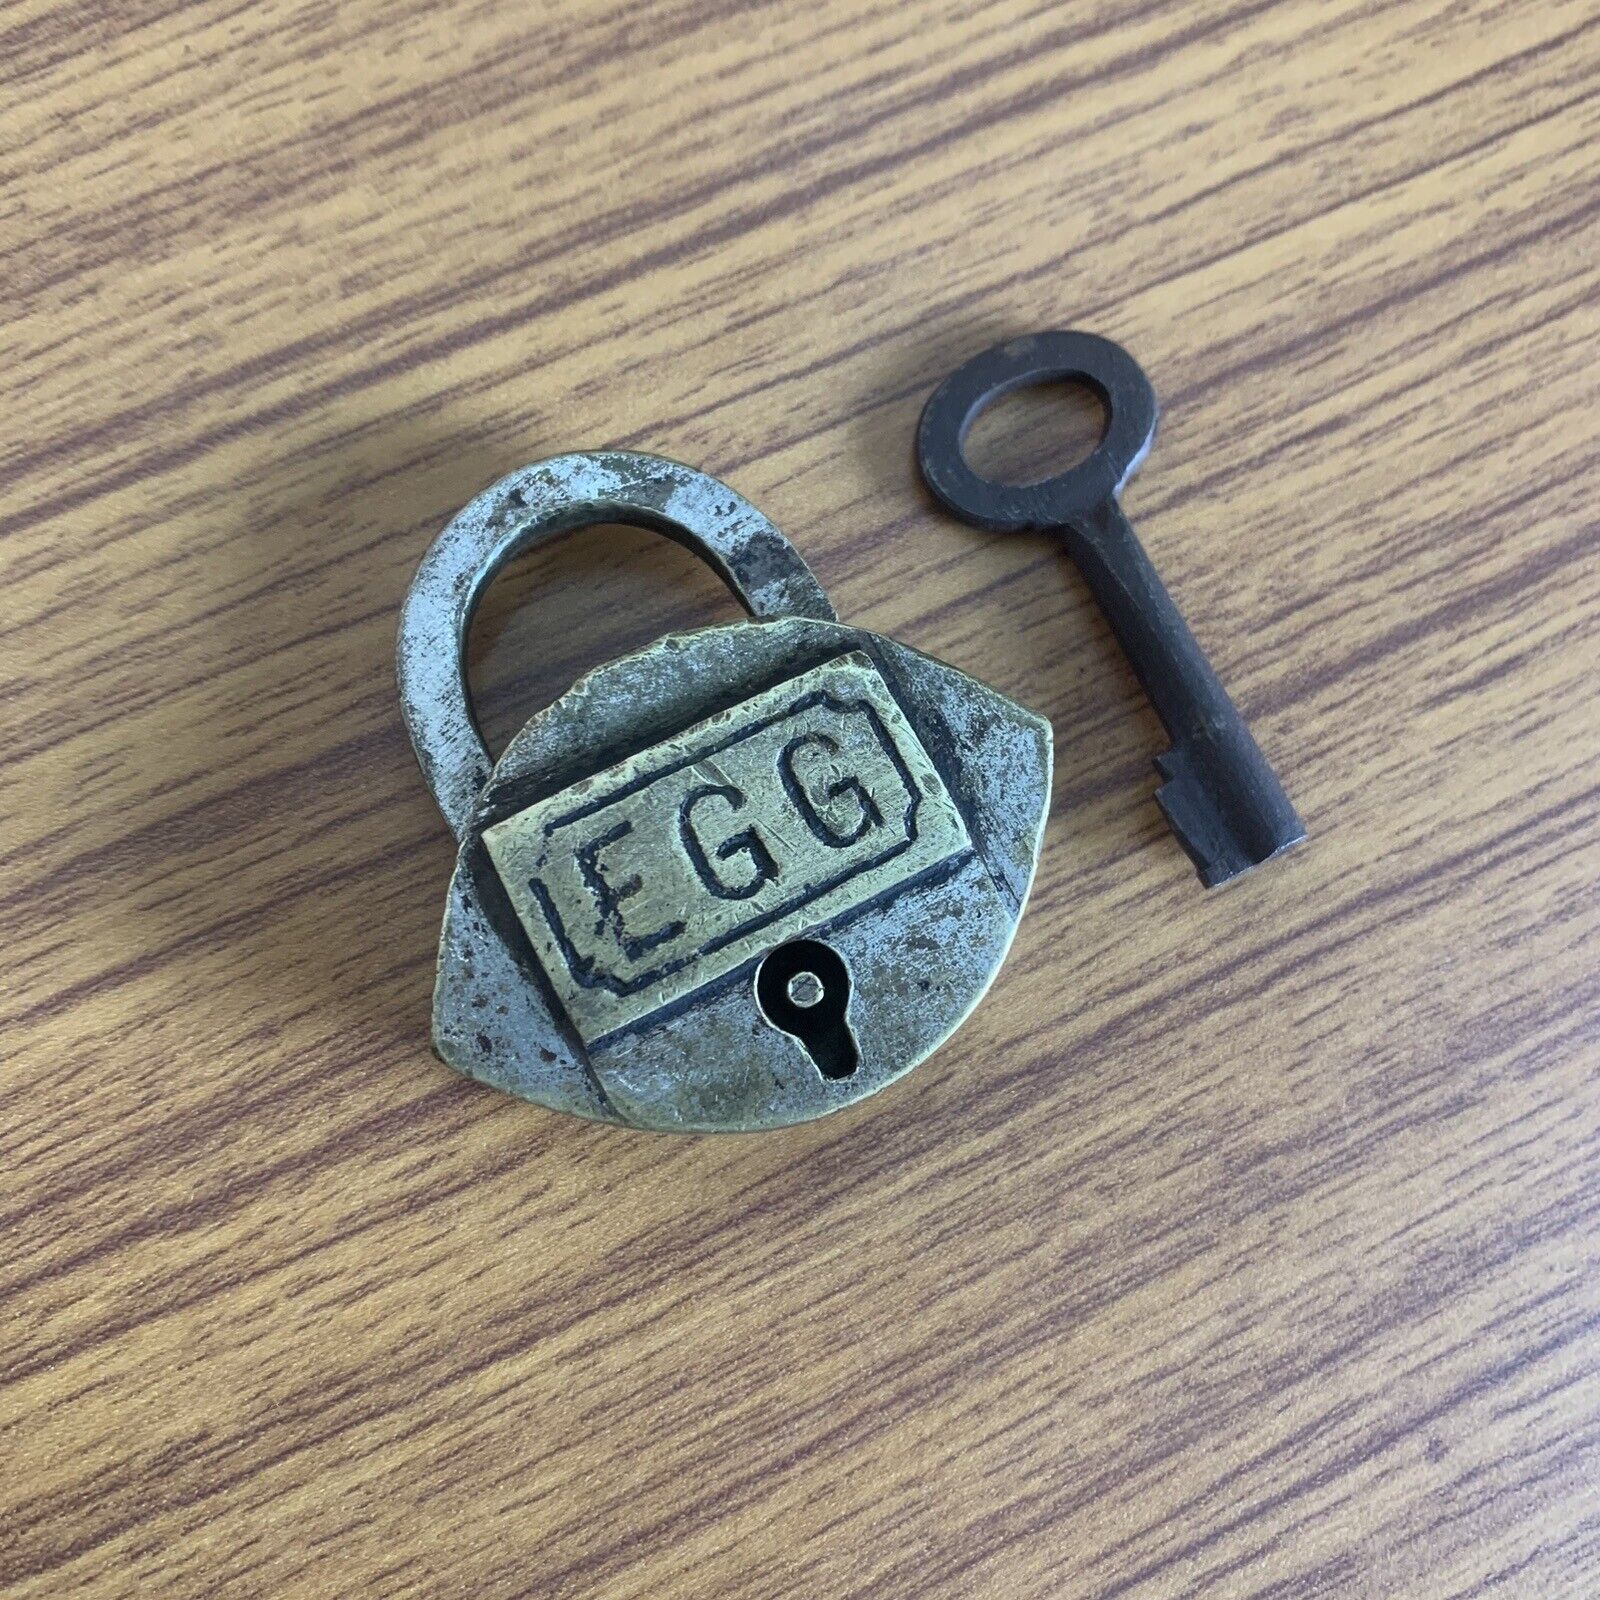 Brass miniature padlock or lock with key, unusual & Rare Shape.